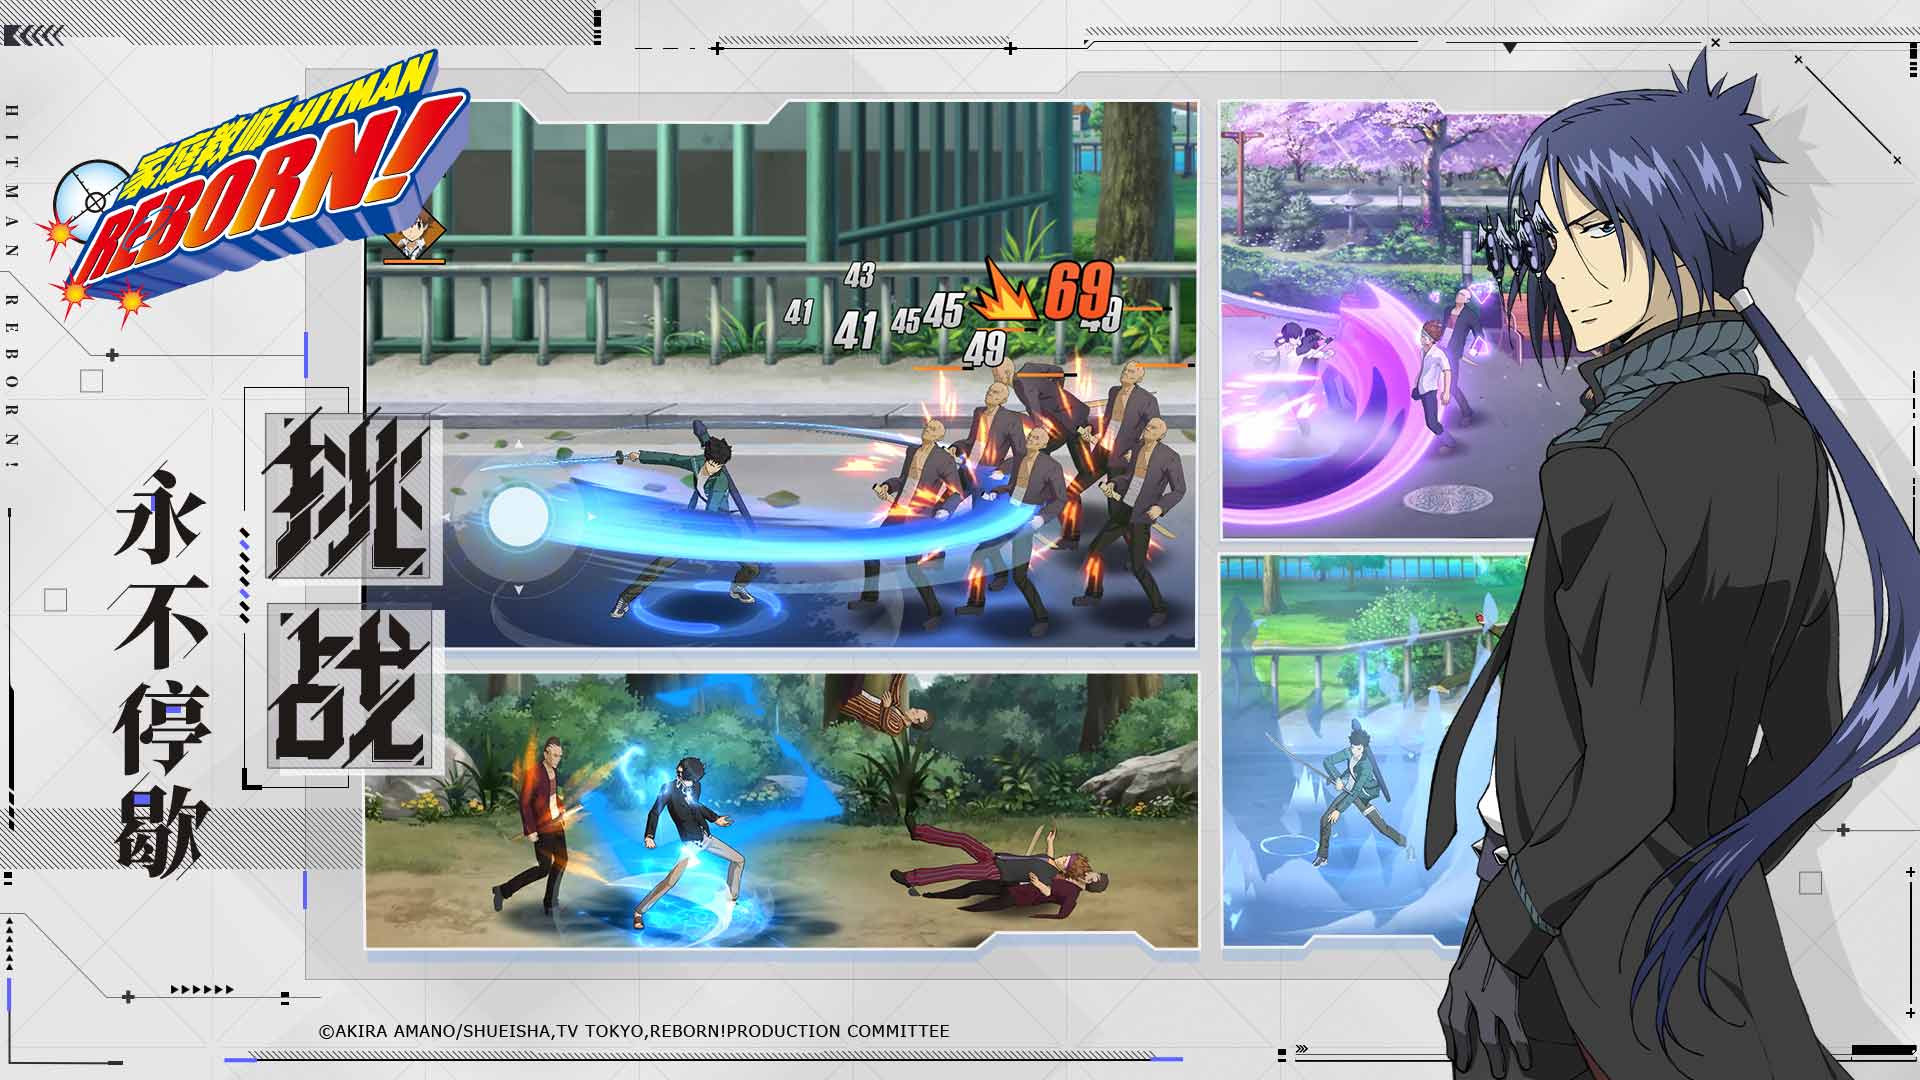 Katekyō Hitman Reborn! - Brief look at new mobile game based on